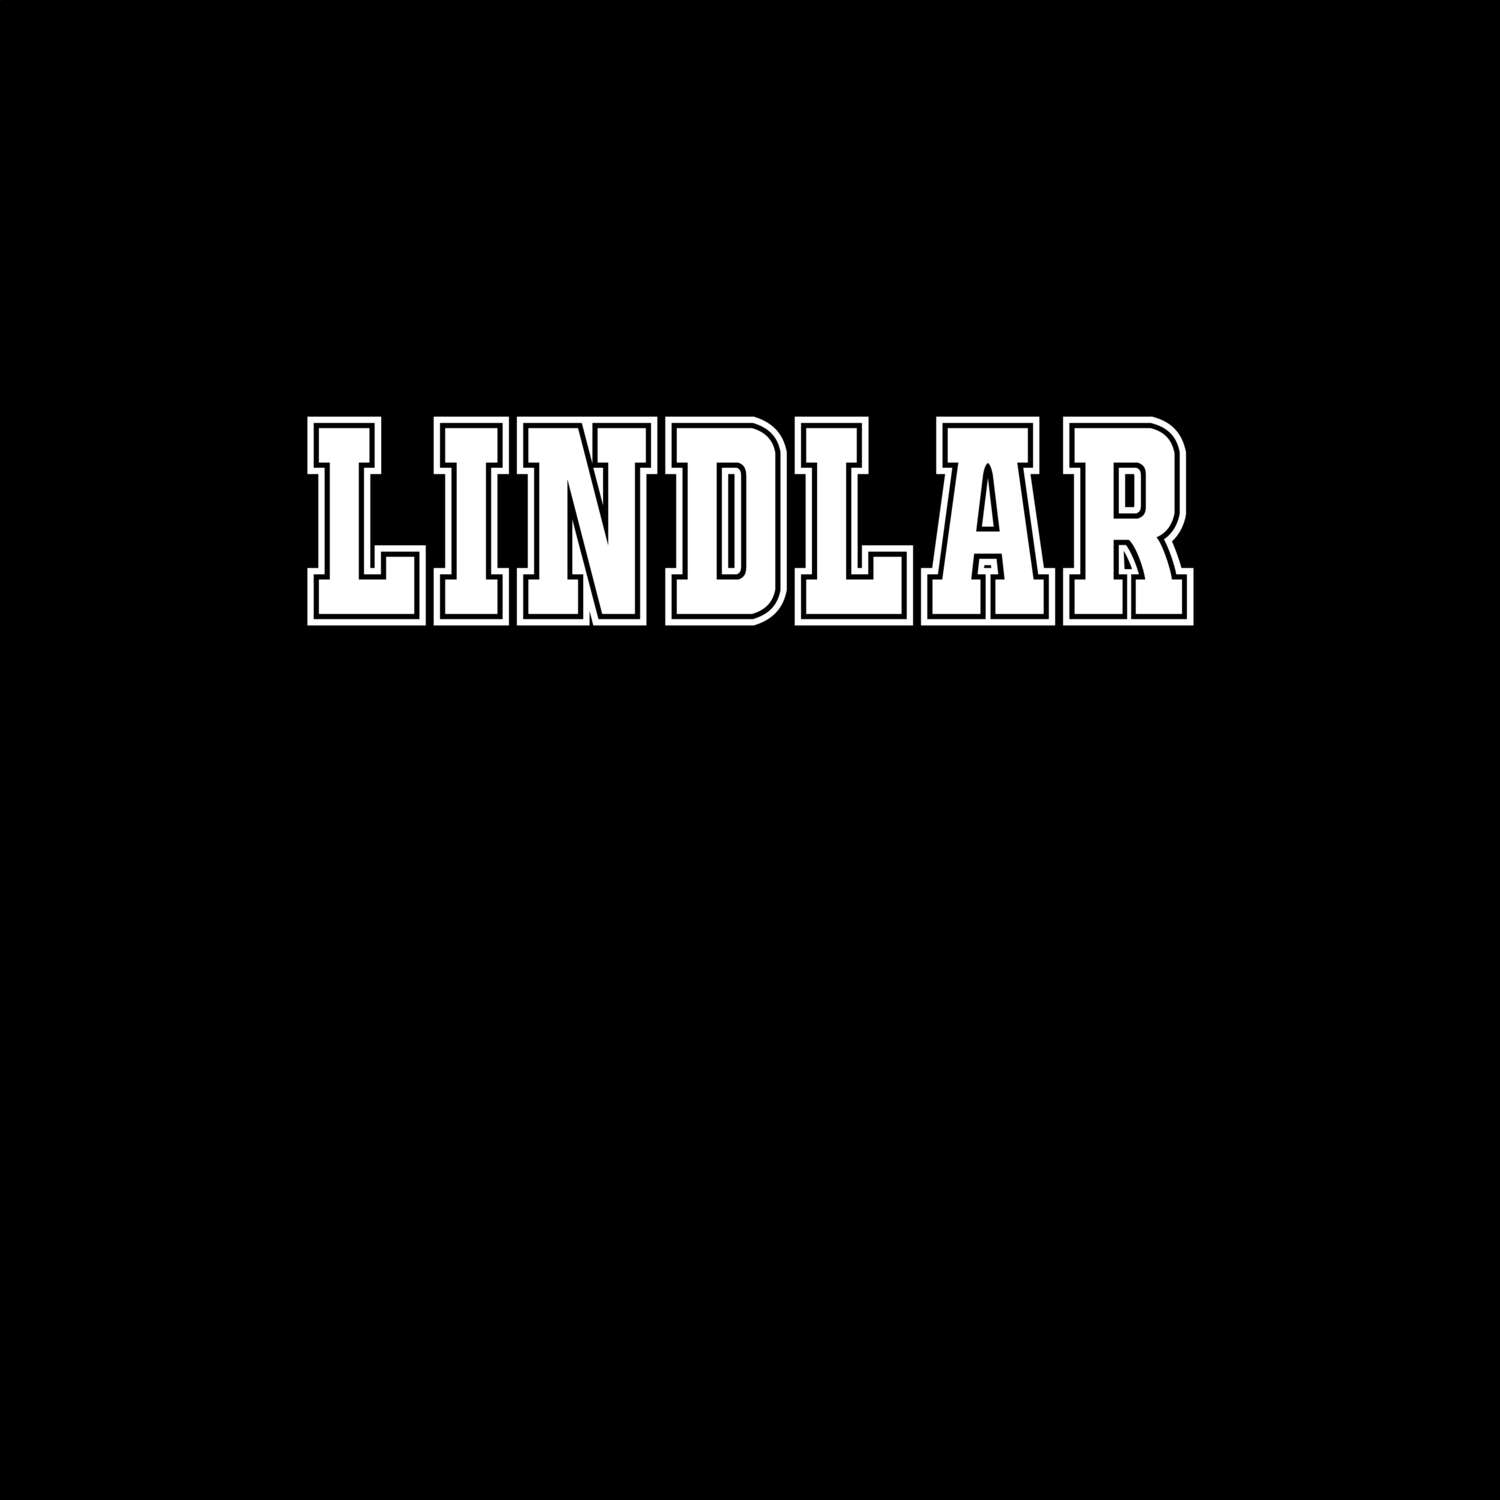 Lindlar T-Shirt »Classic«